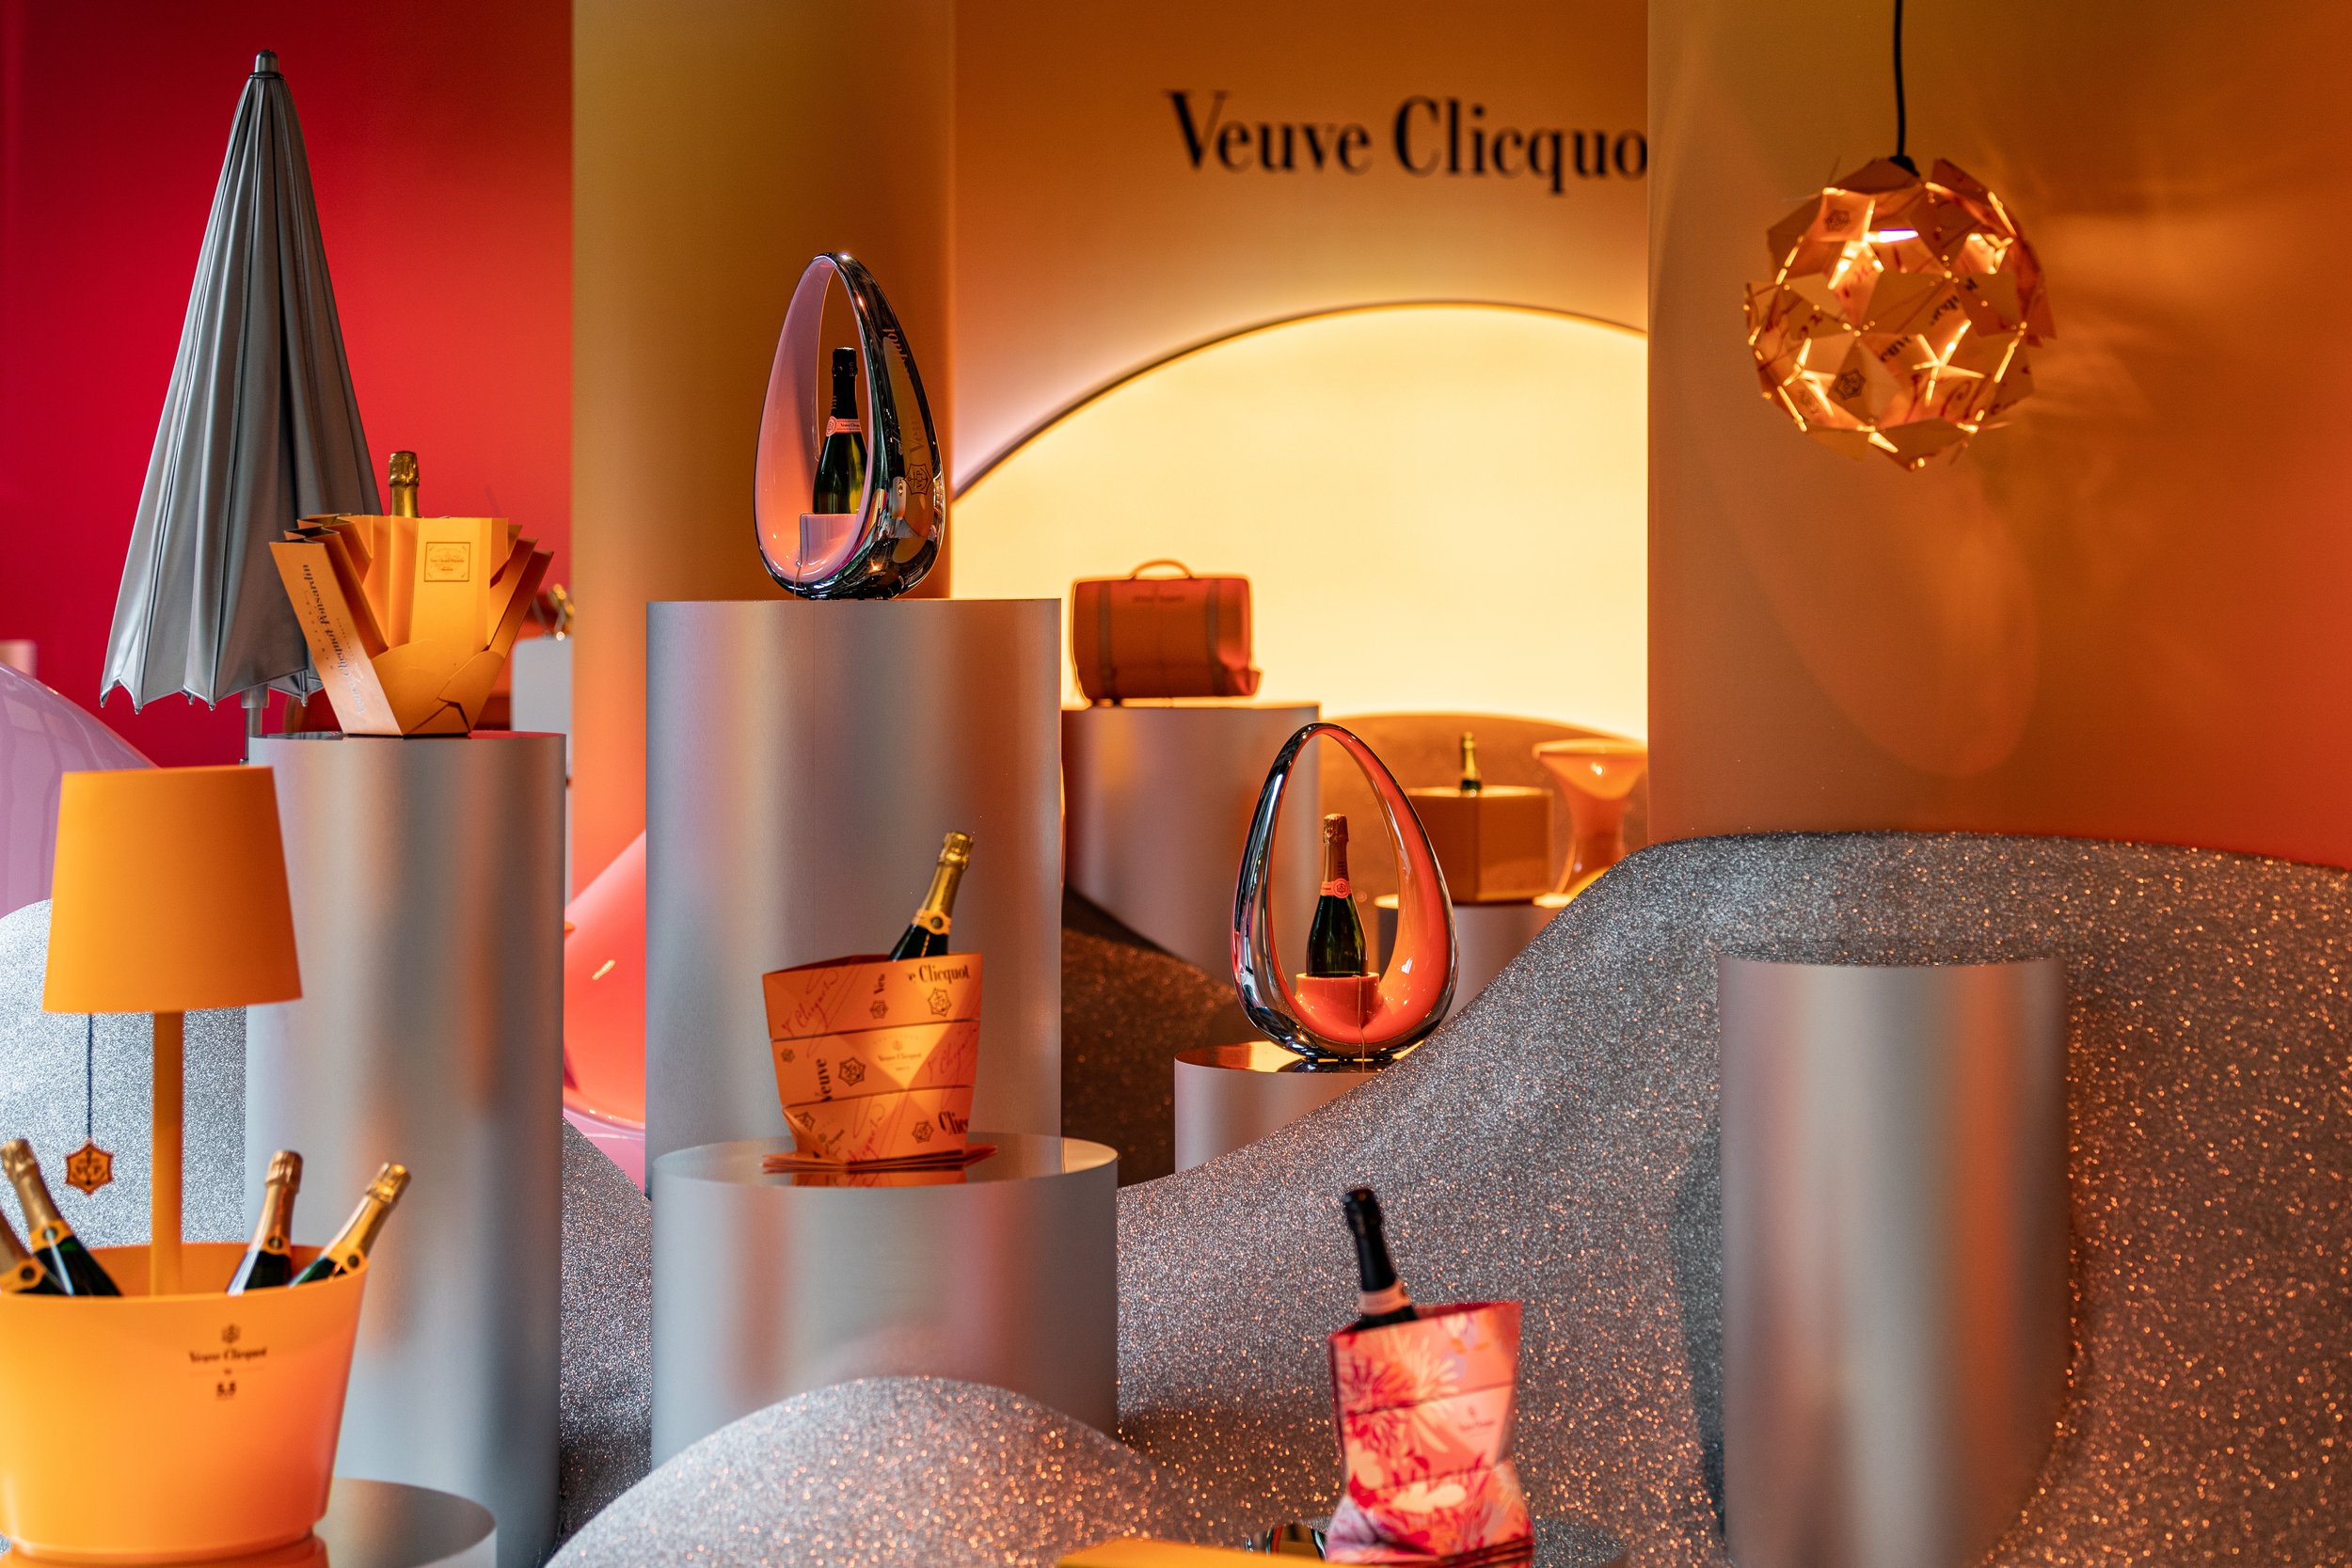 Veuve Clicquot: Solaire Culture London Exhibition: Grand Opening